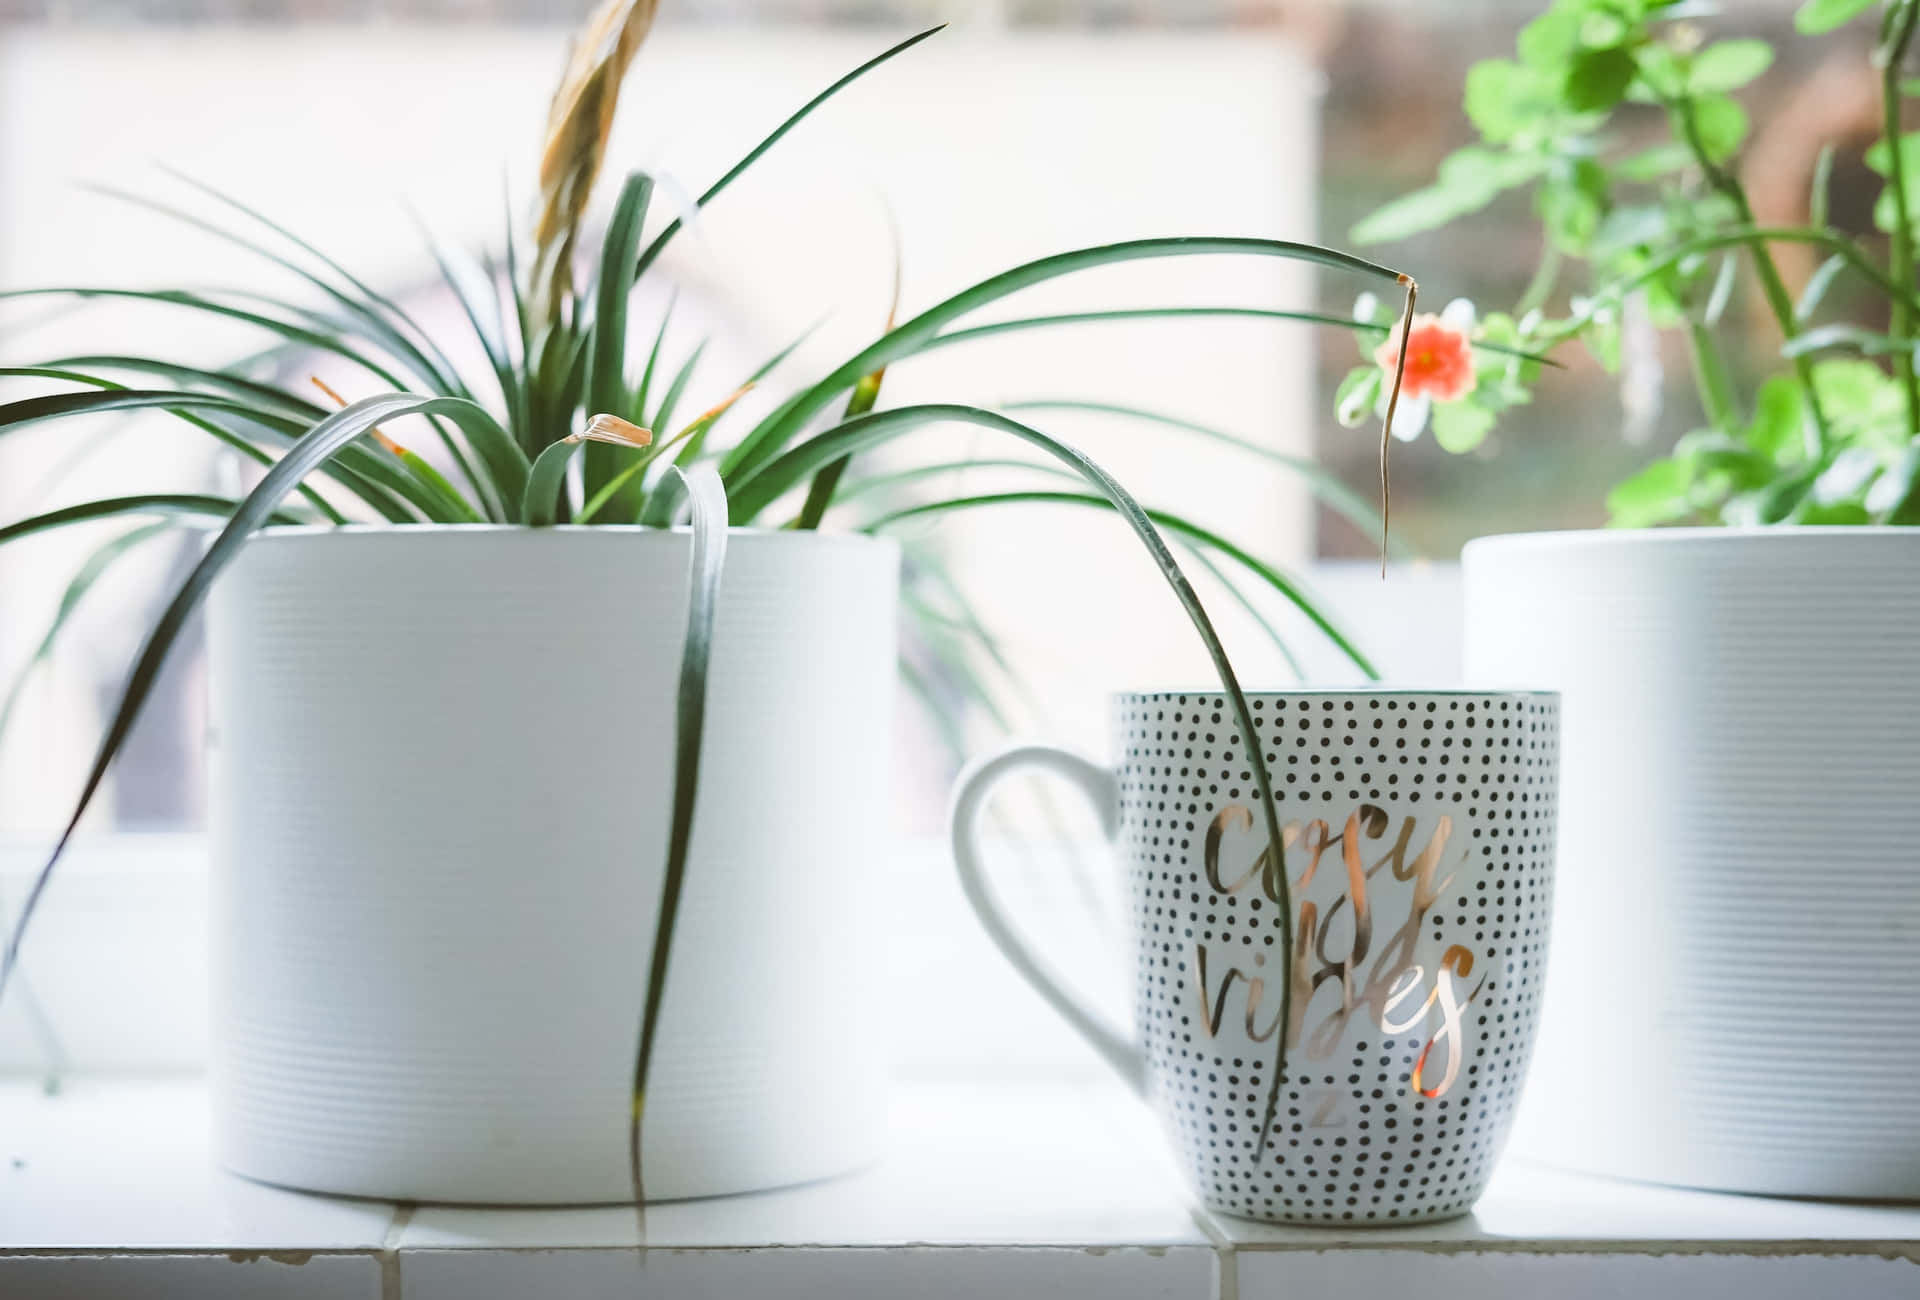 Aesthetic Green Background Indoor Plants And Mug